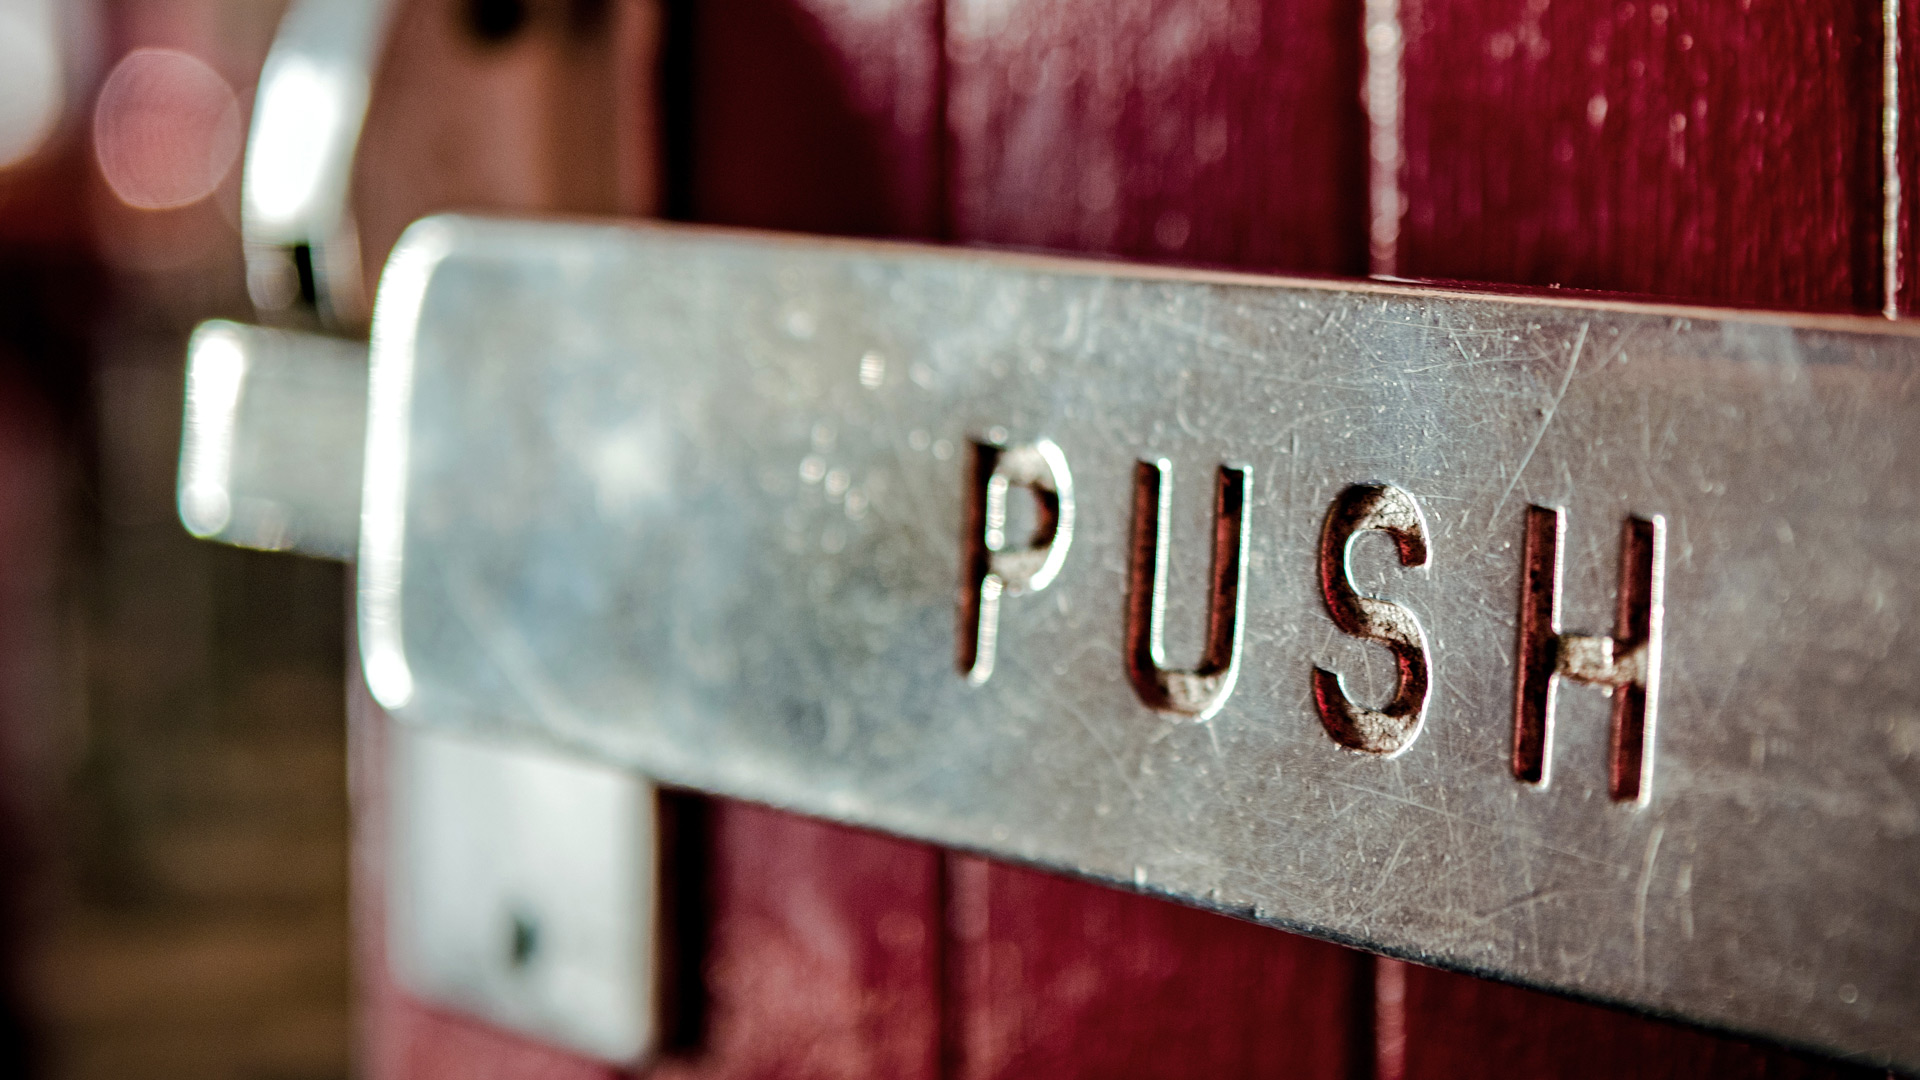 Metal door lever with the word push (Tim Mossholder unsplash.com)